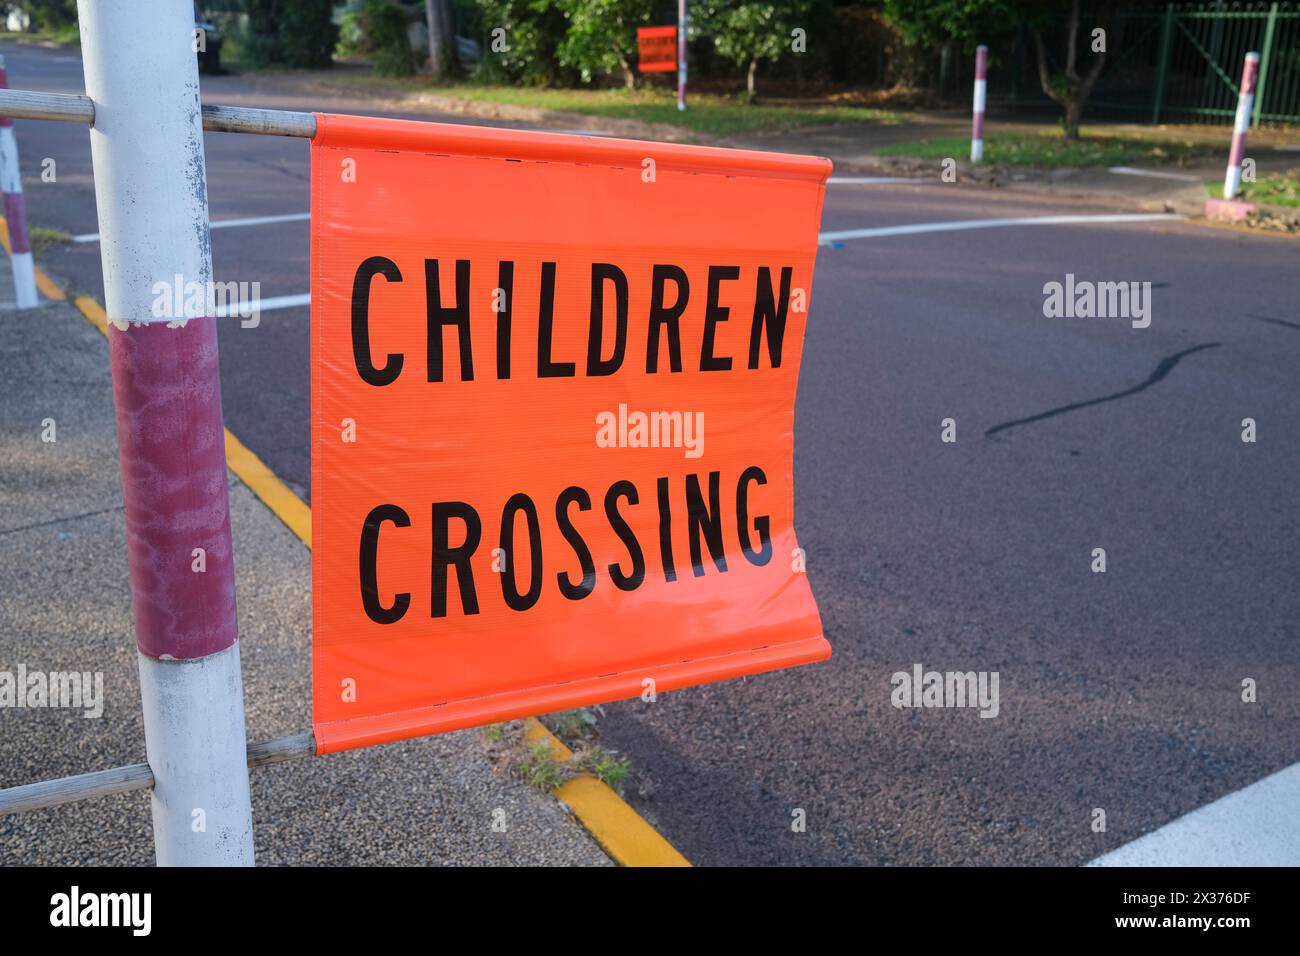 Children Crossing sign flag Stock Photo